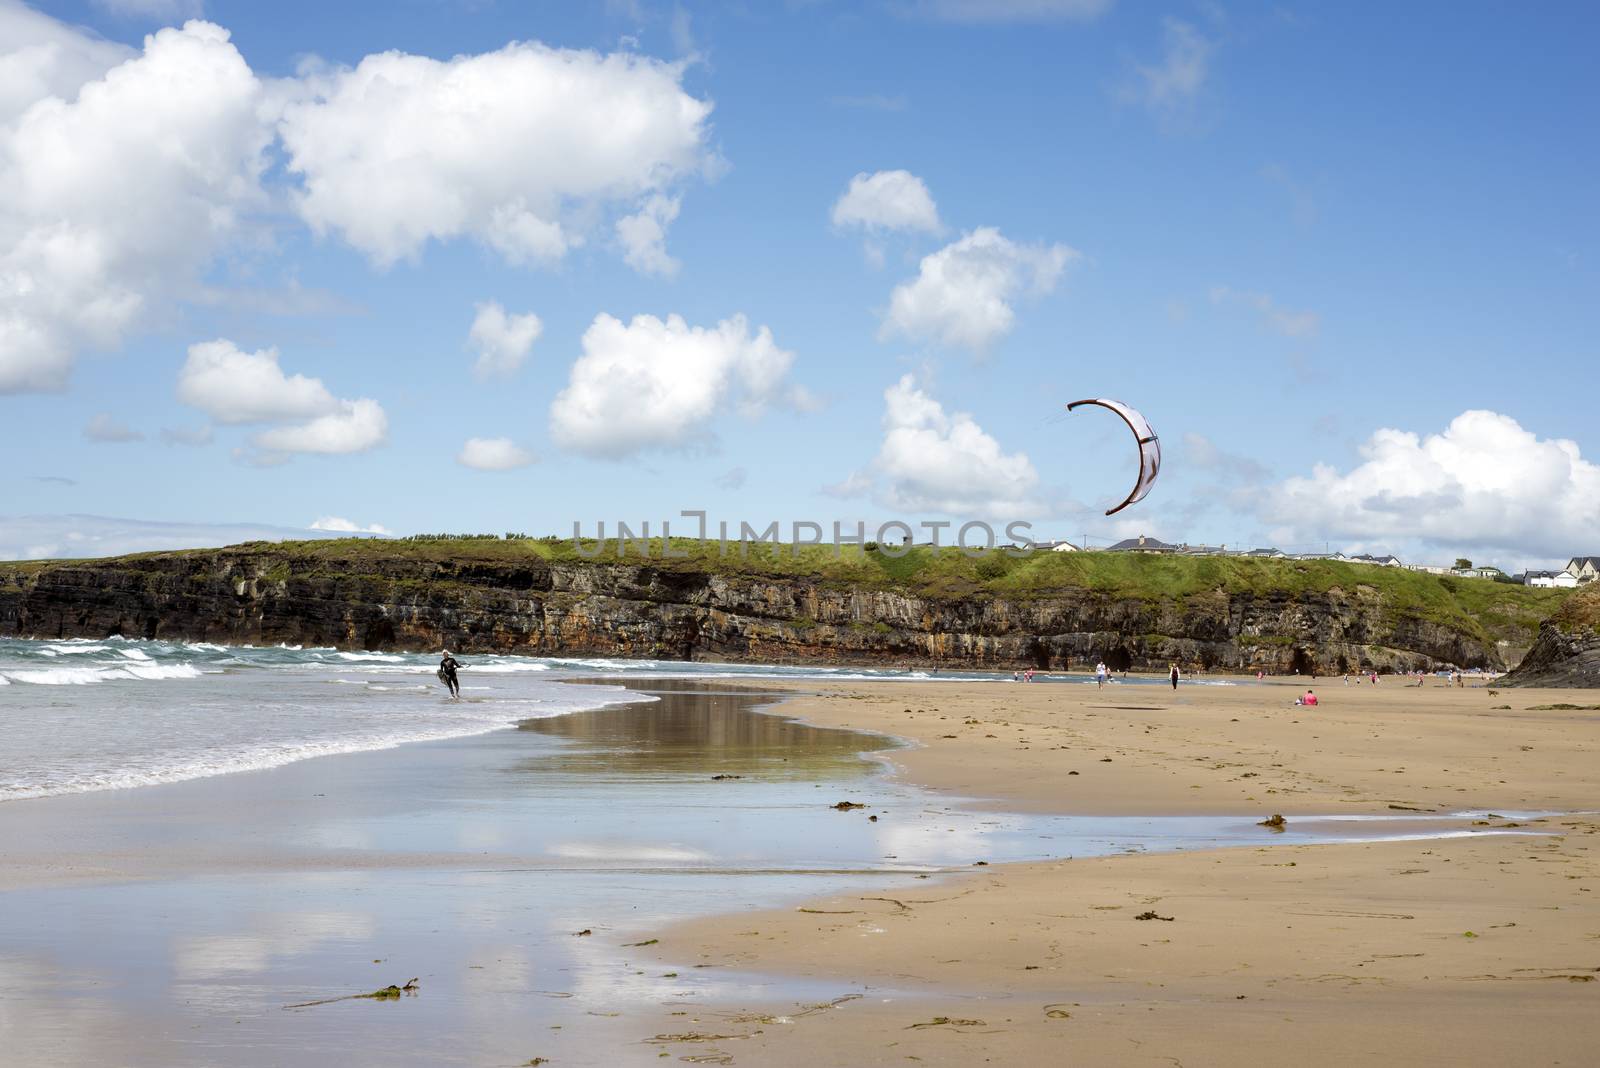 lone kite surfer getting ready at ballybunion beach on the wild atlantic way